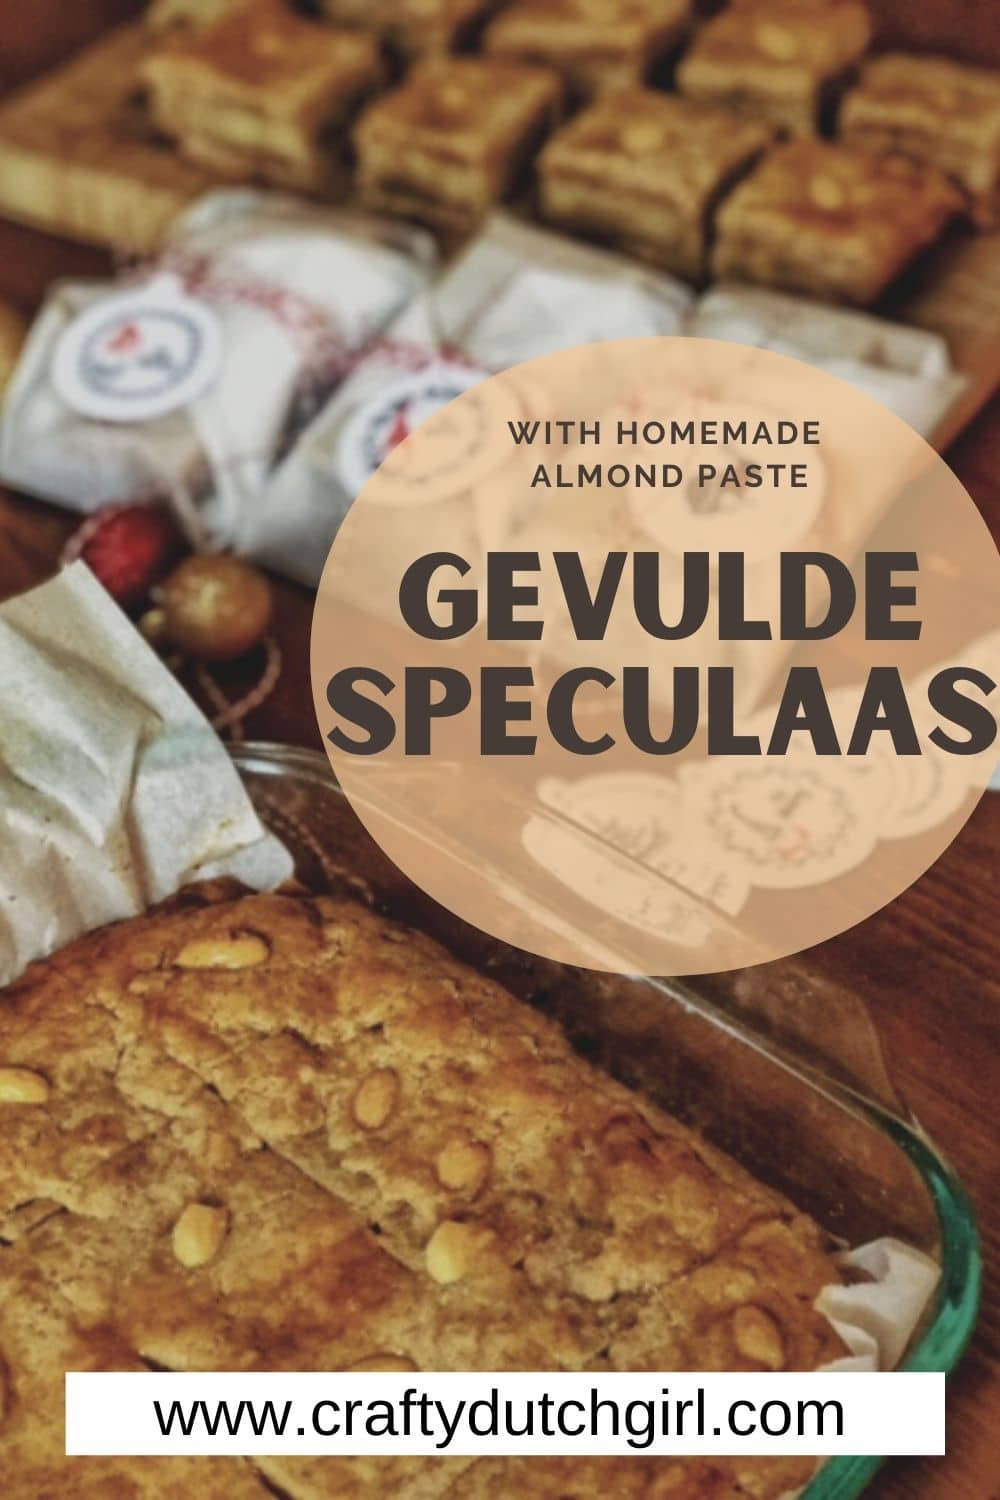 Traditional Dutch treats